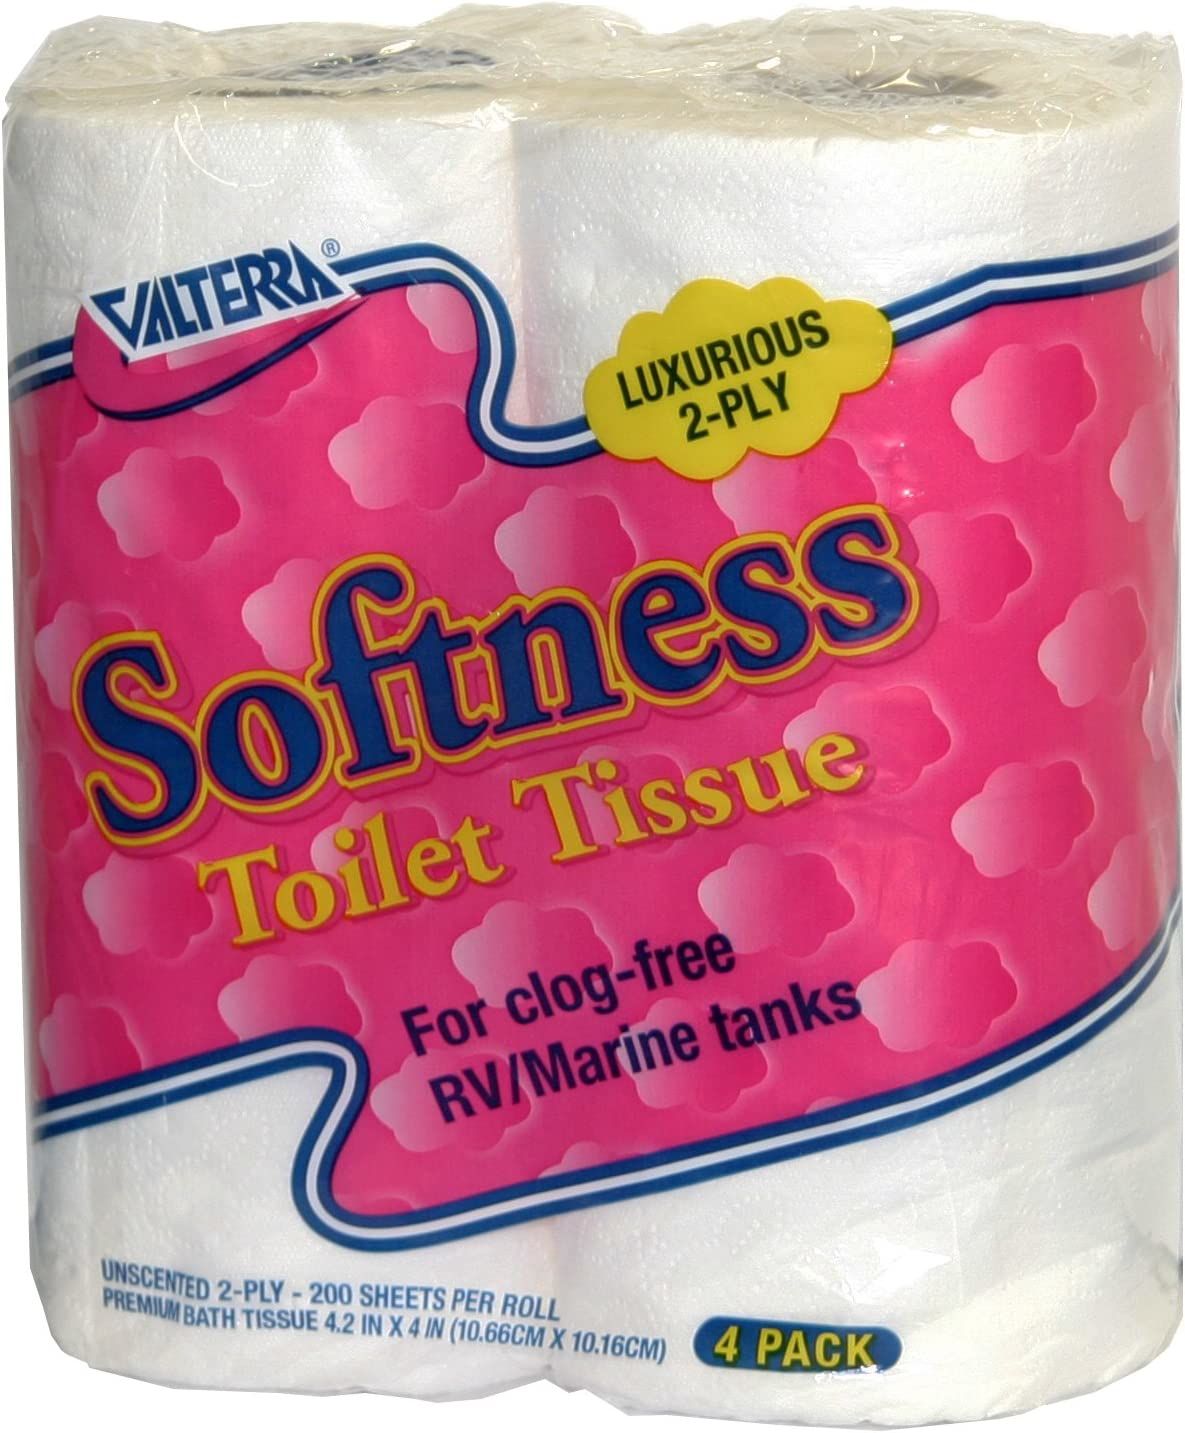 Valterra Q23630 - Softness 2-Ply Toilet Tissue, (Pack of 4) - box of 24